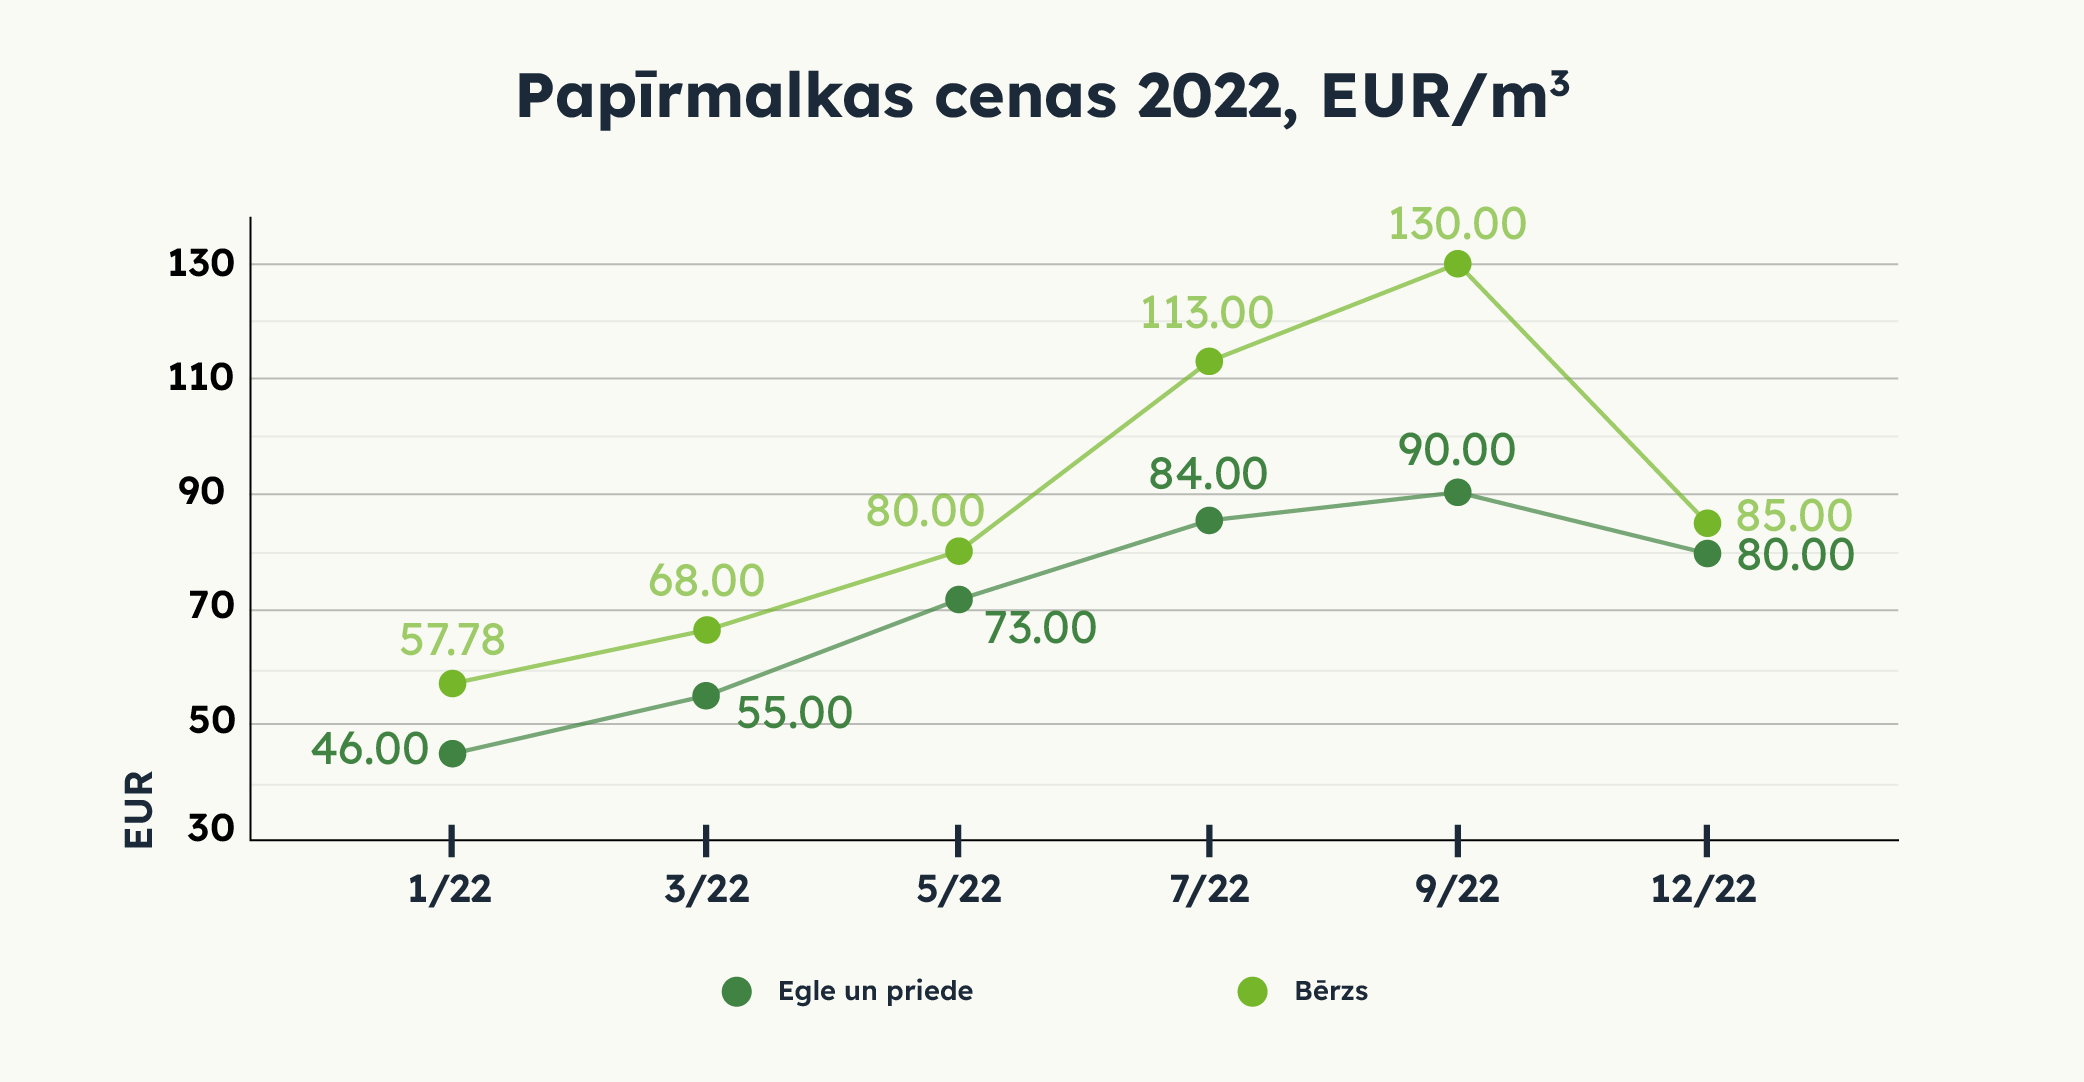 20230124-1734-papirmalkas-cenas-2022.png